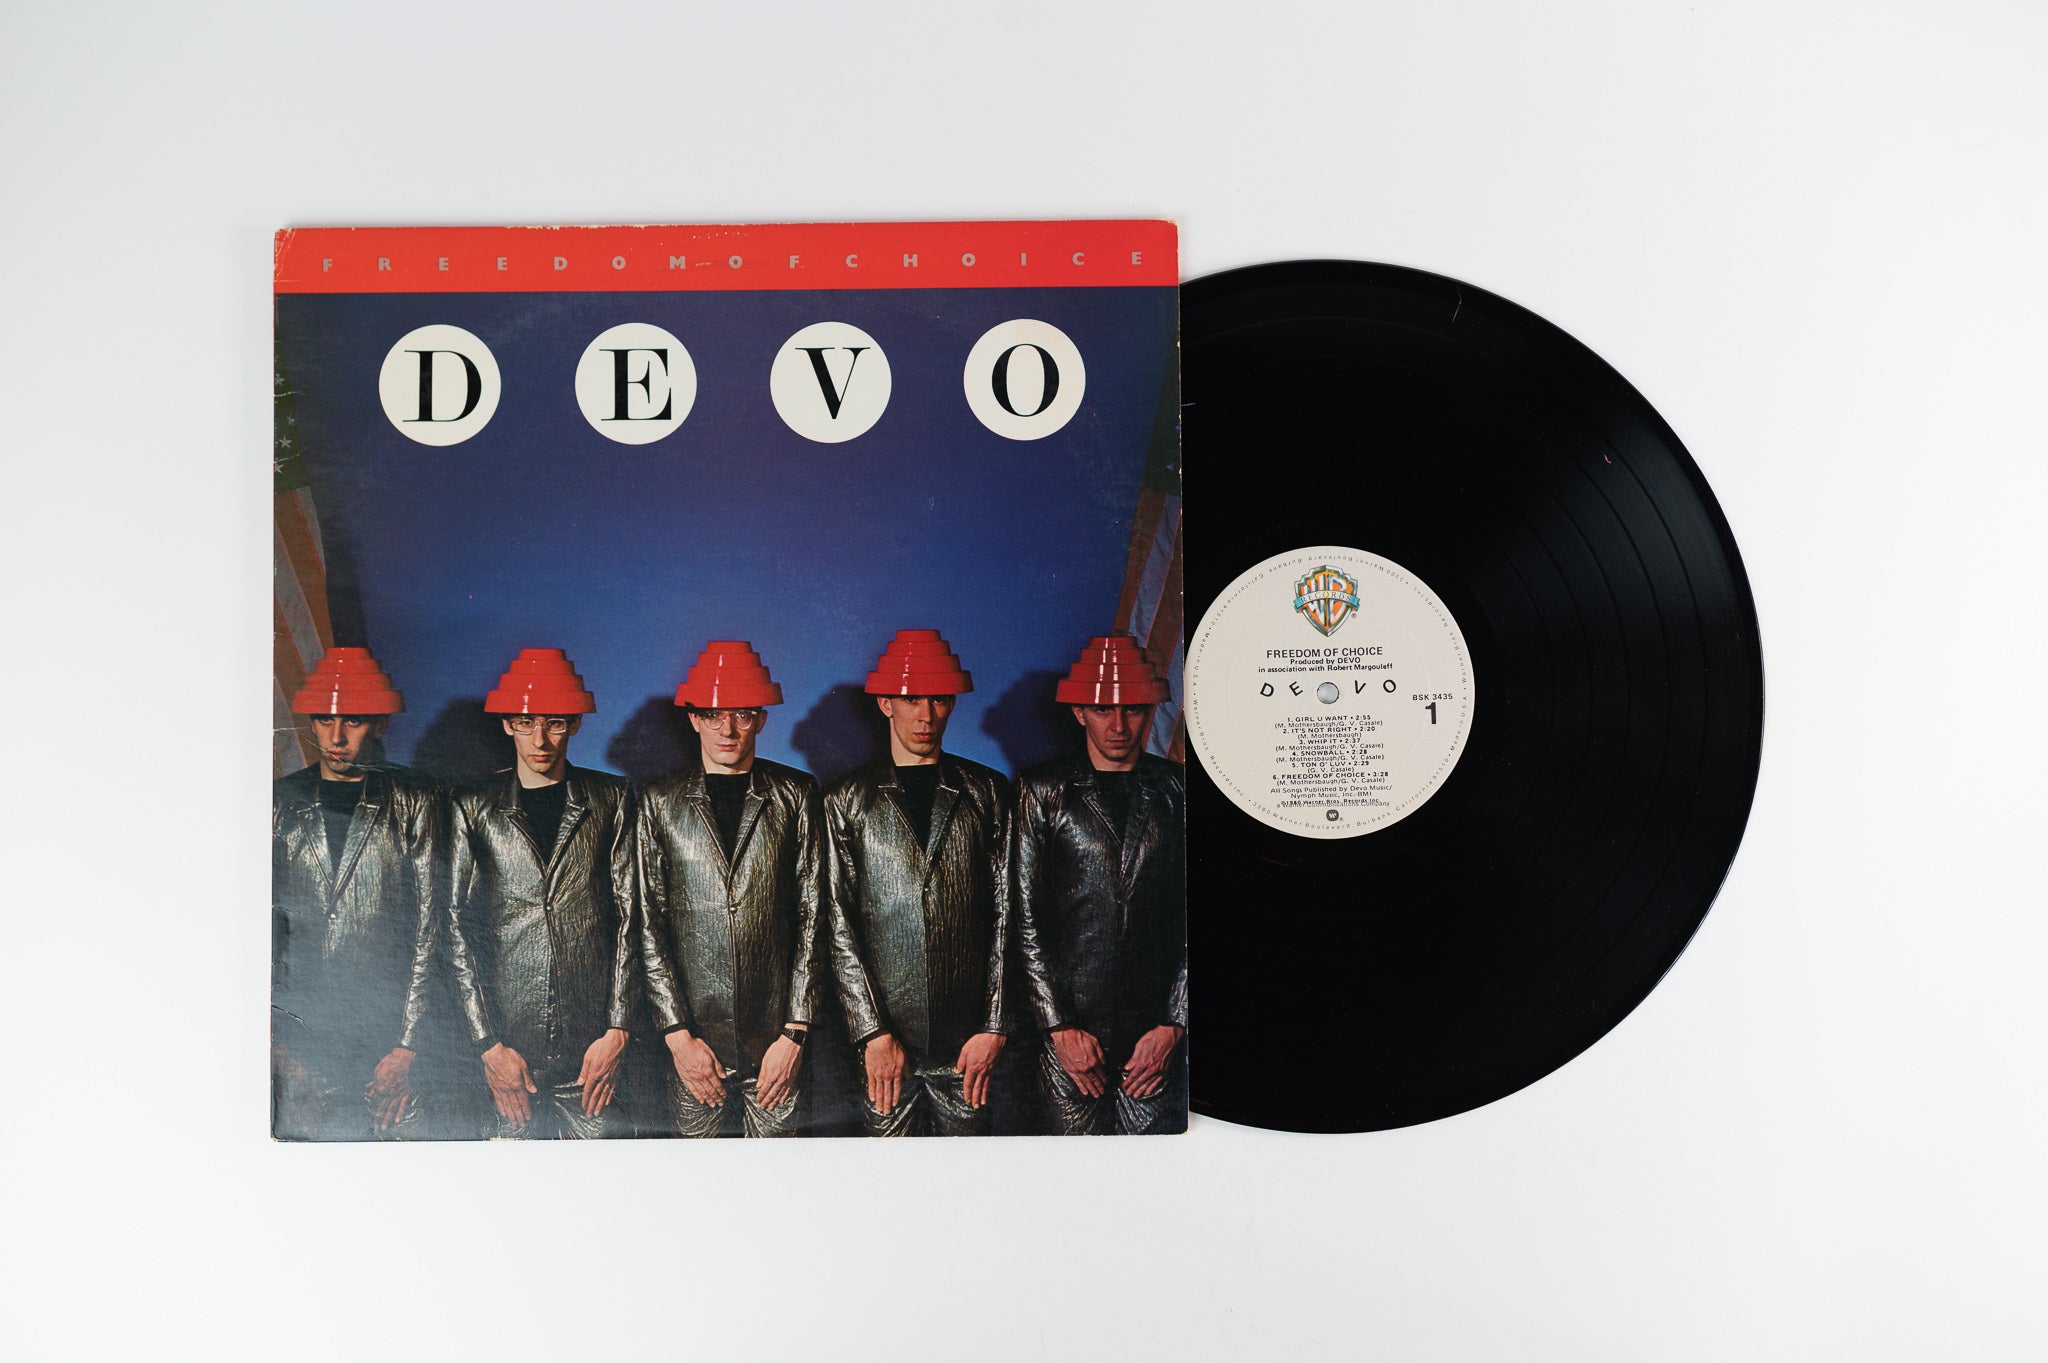 Devo - Freedom Of Choice on Warner Bros. Records